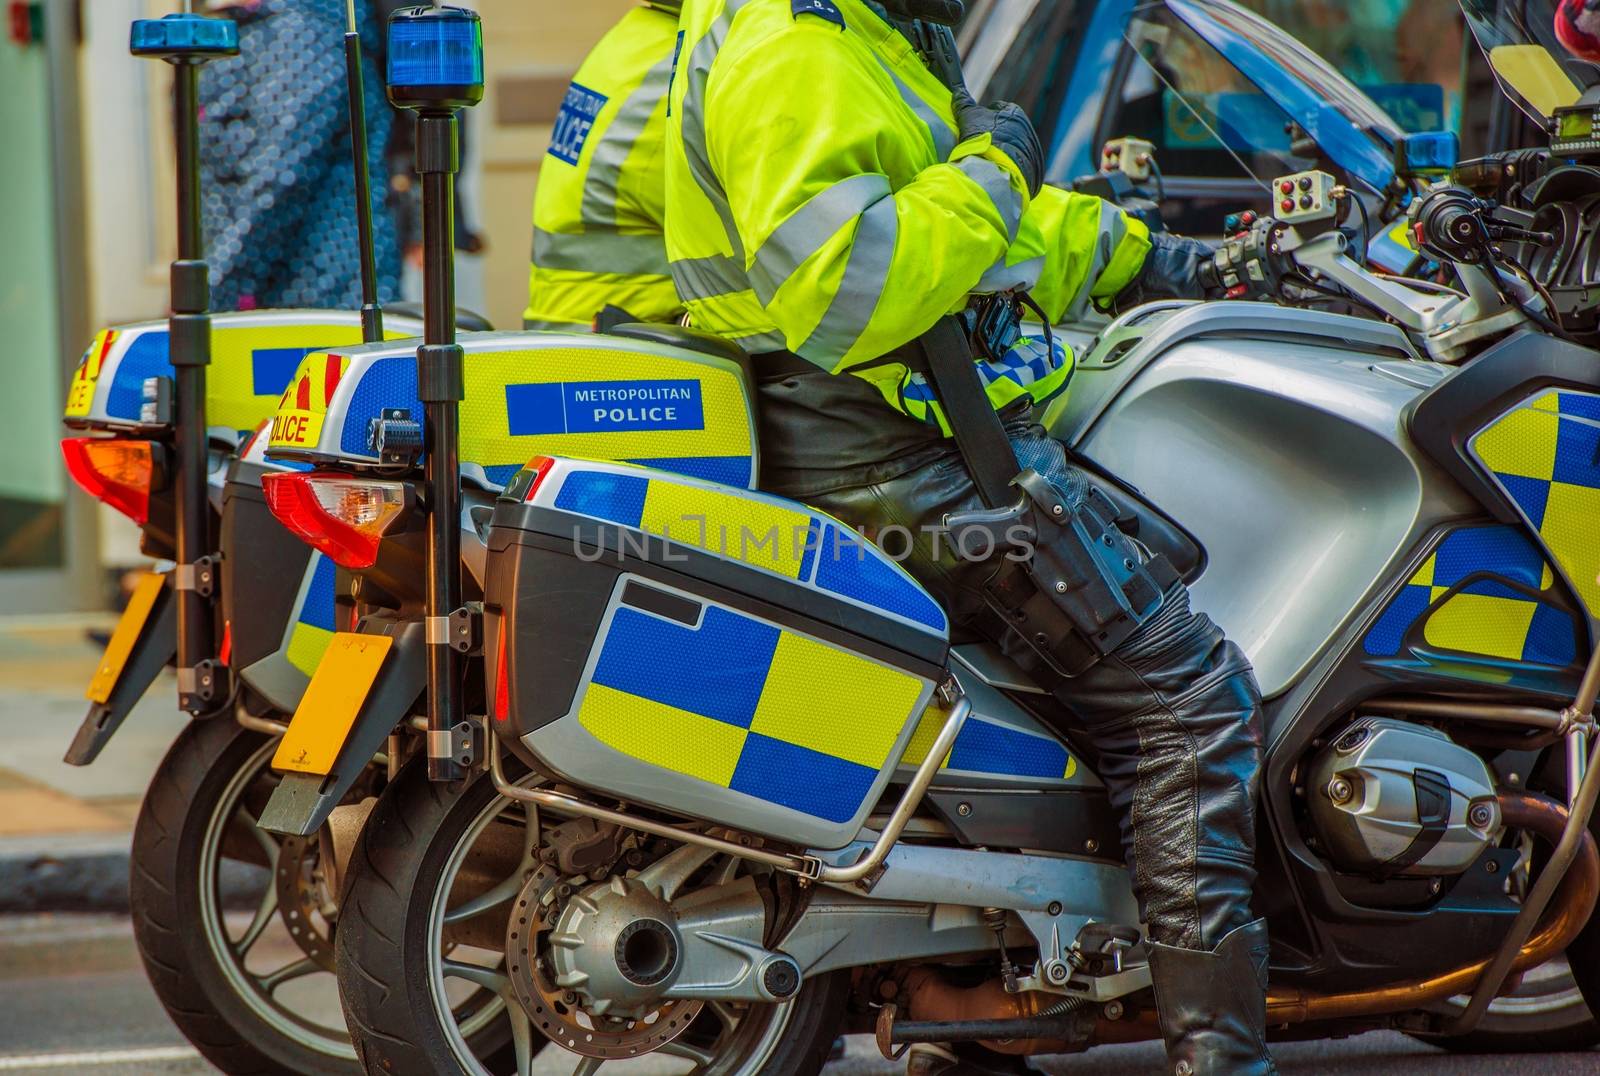 London Motorcycle Police. London Metropolitan Police Officers on Bikes. London, United Kingdom.